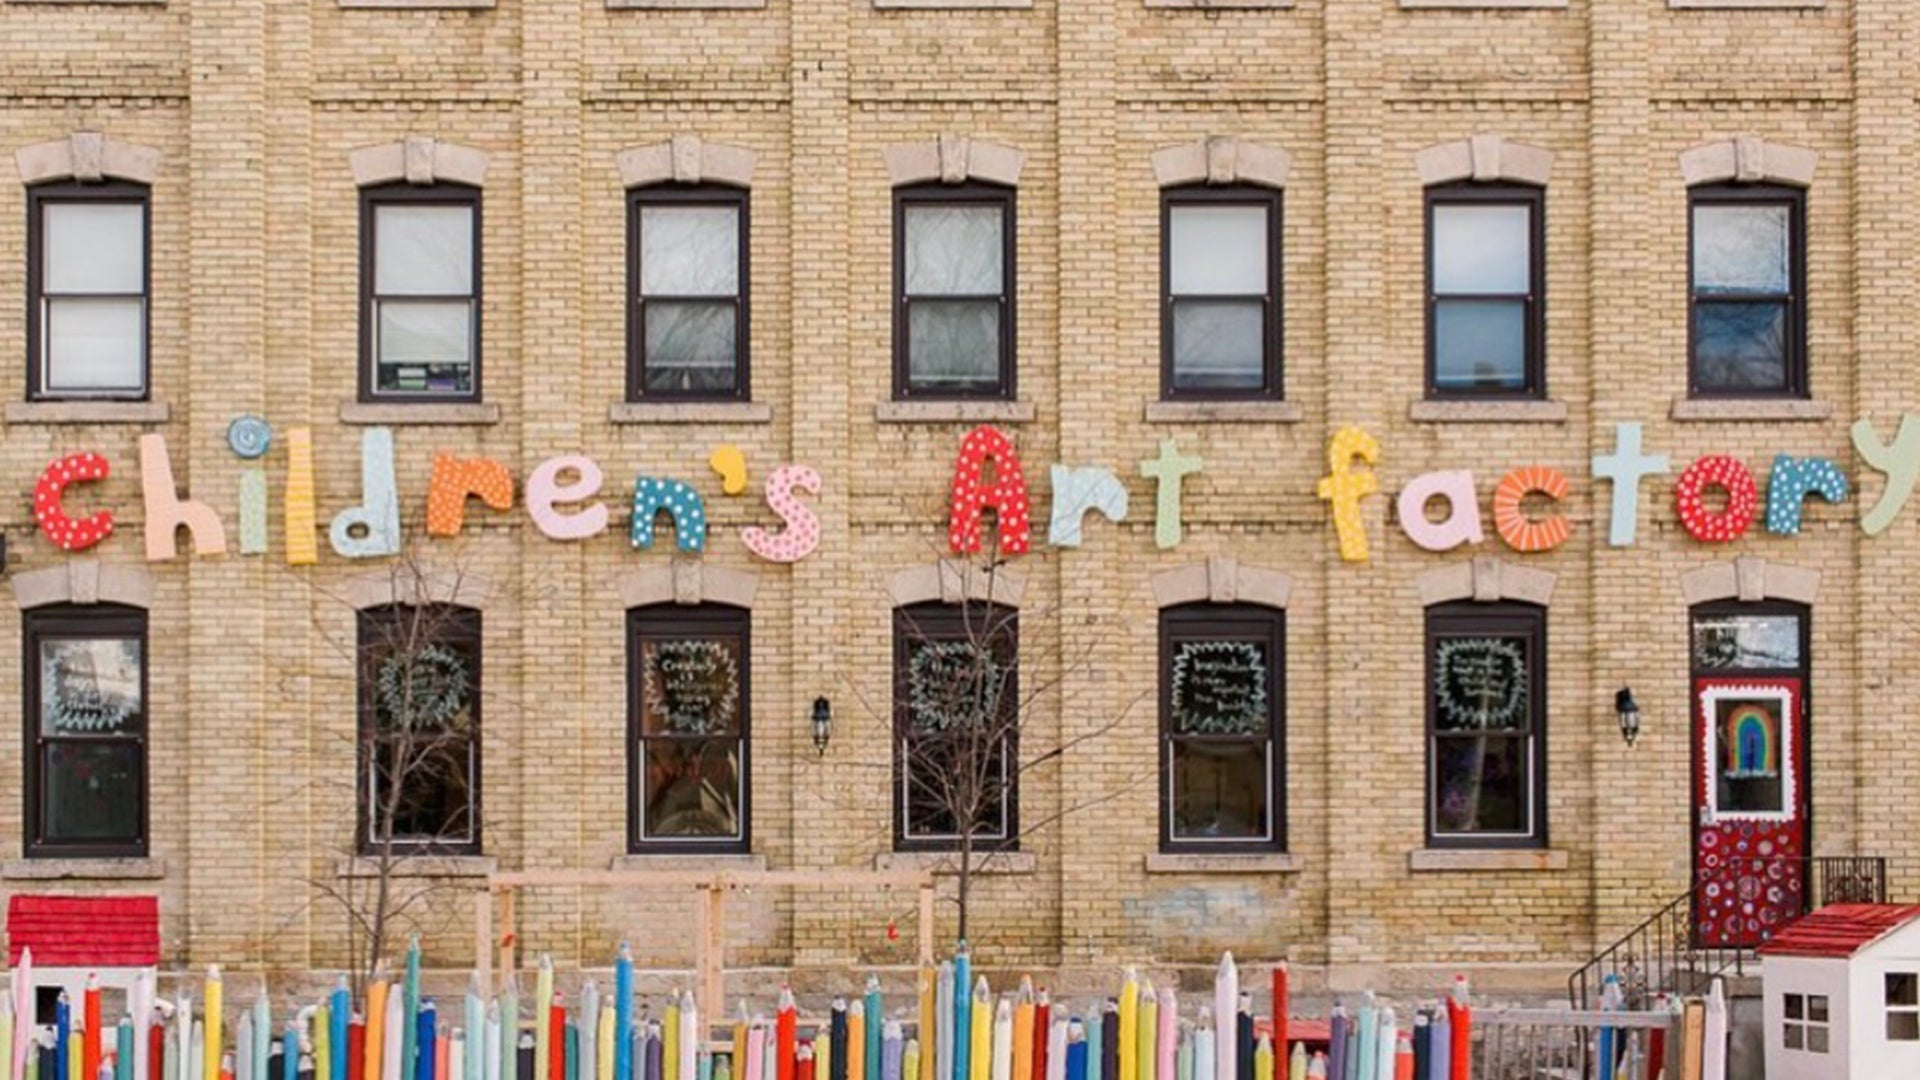 About Children's Art Factory